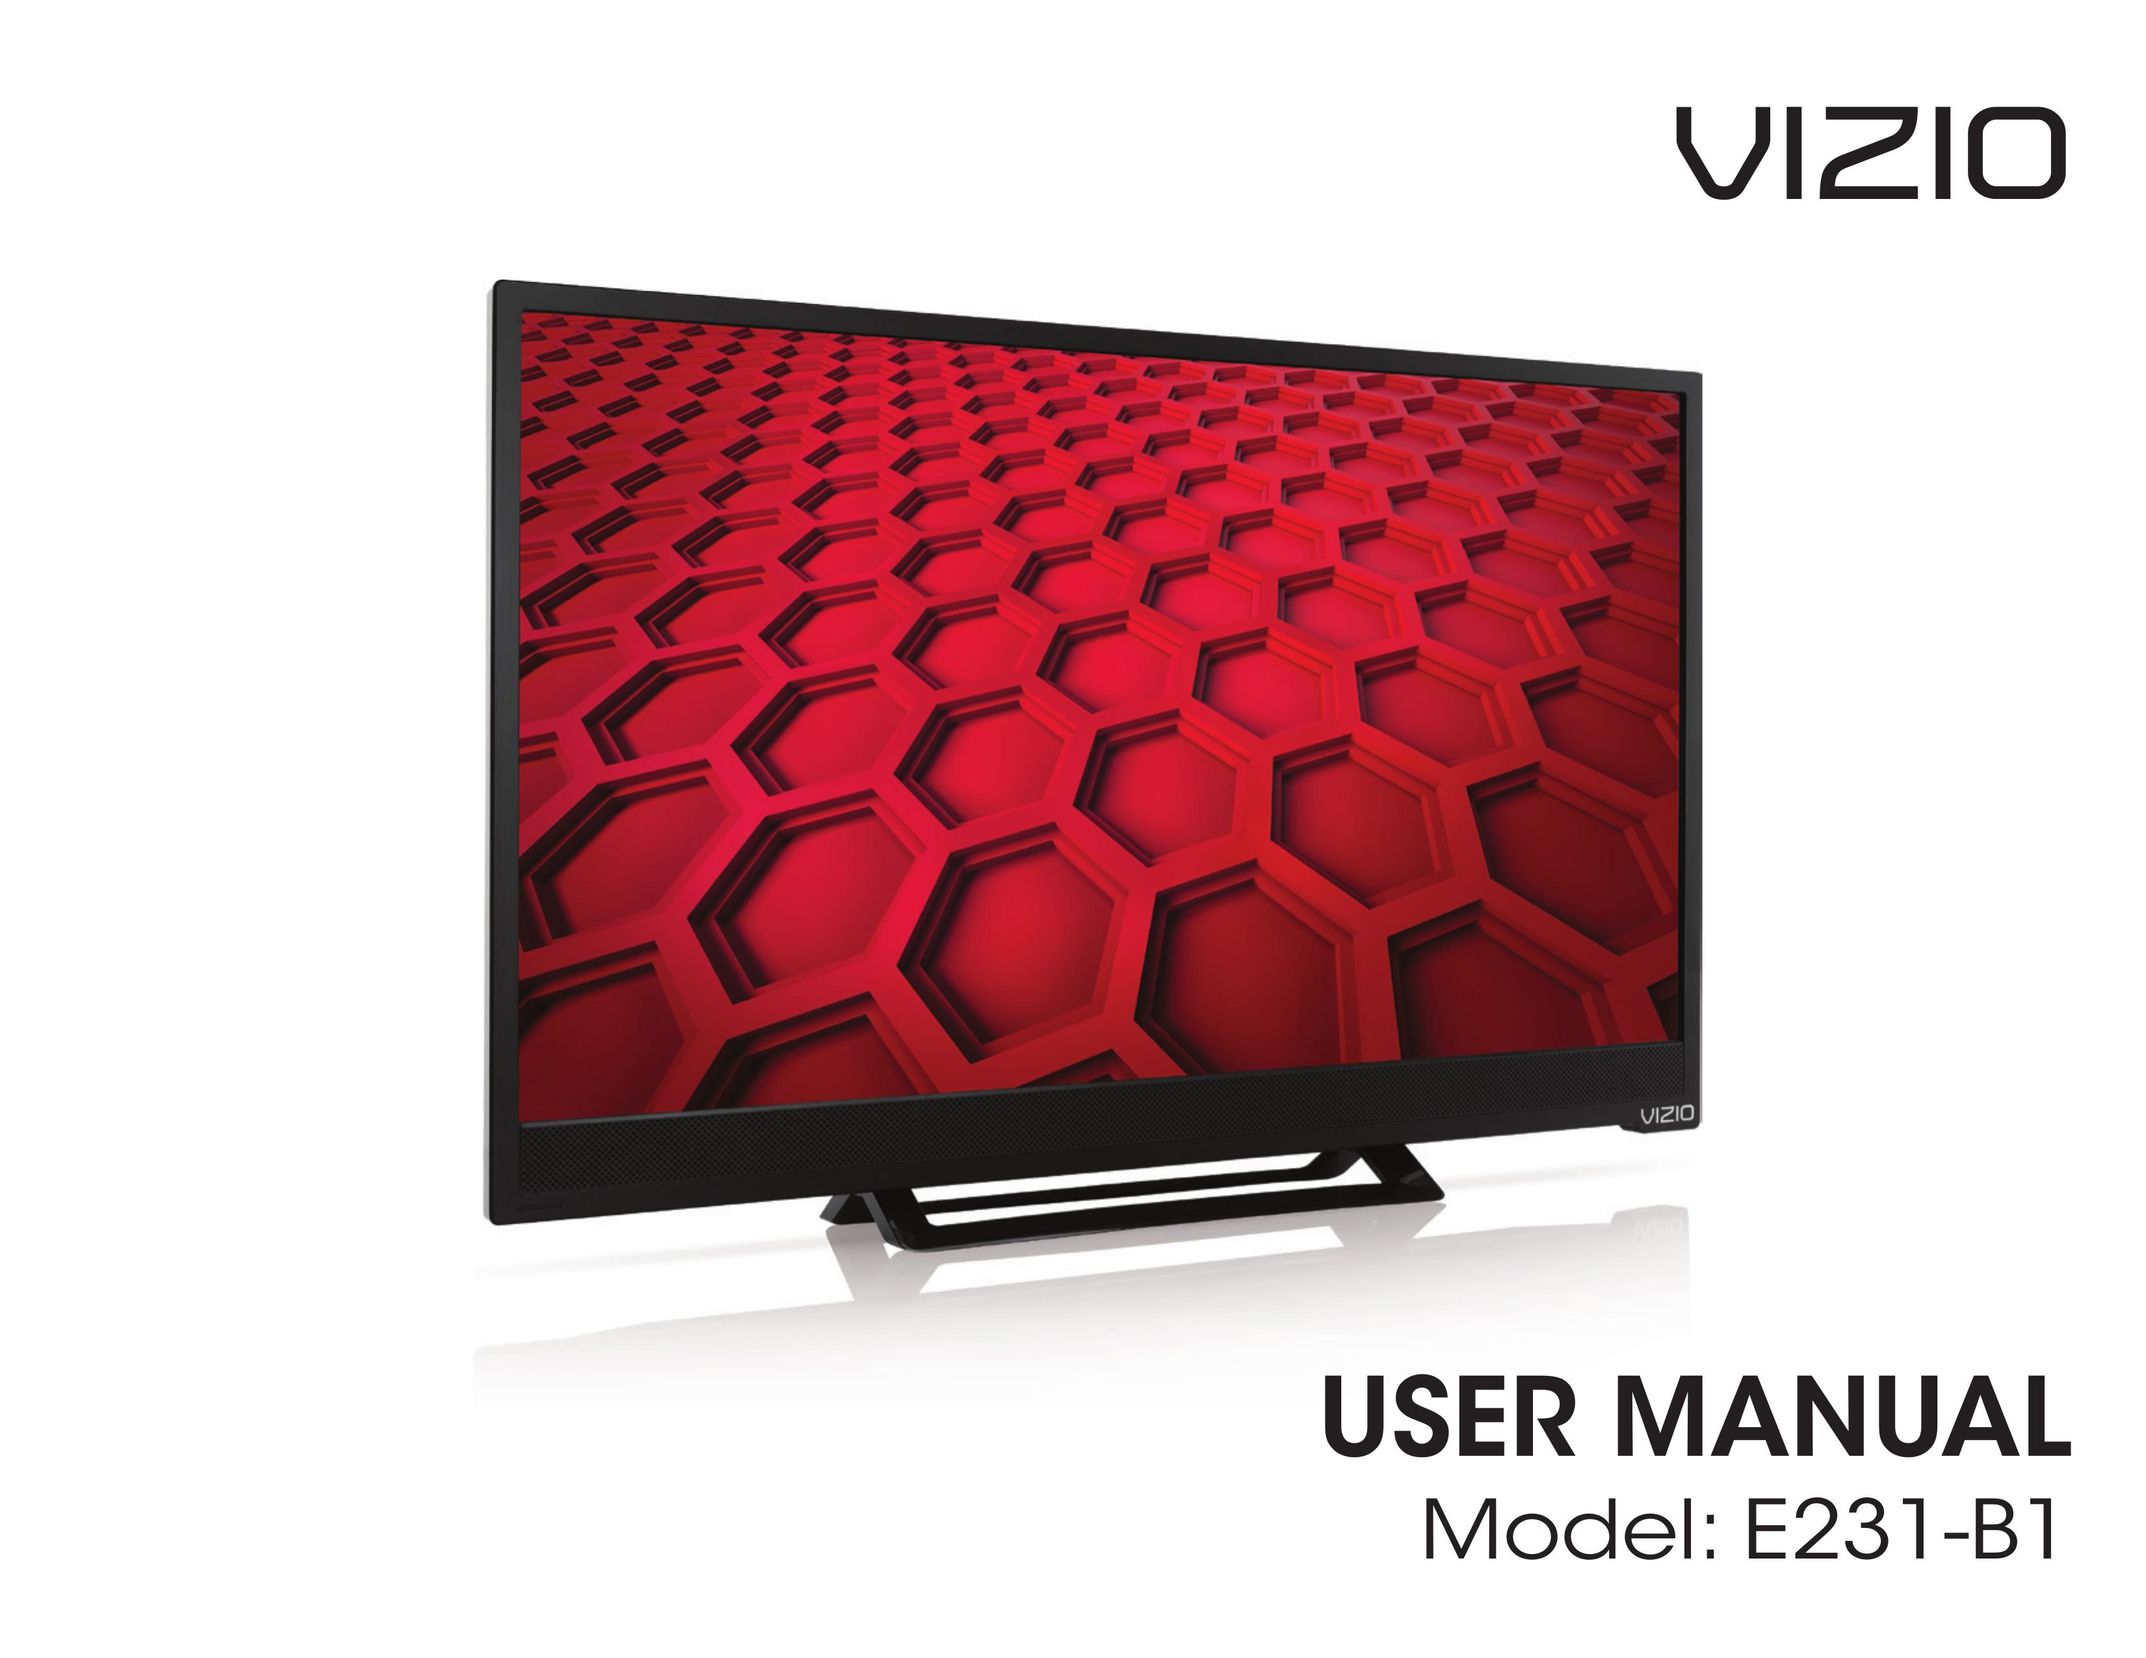 Vizio E231-B1 Flat Panel Television User Manual